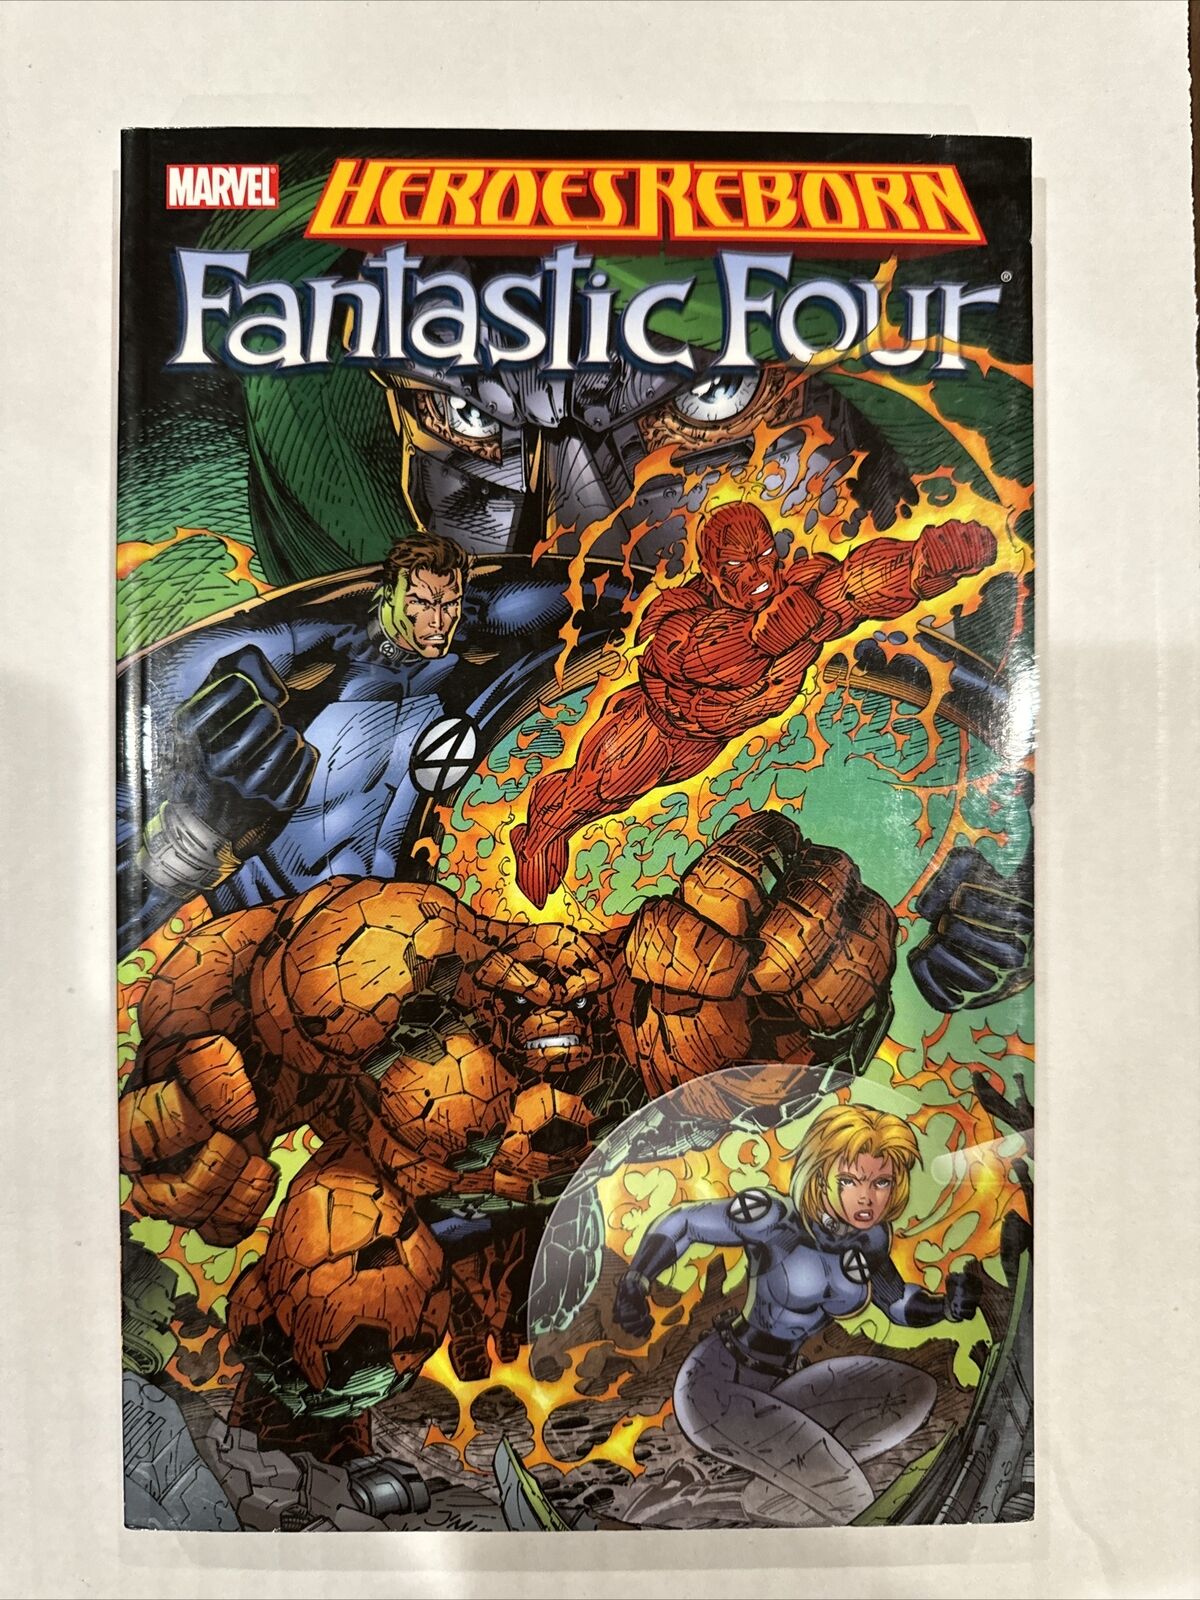 Heroes Reborn Fantastic Four Tpb SC Graphic Novel Marvel Comics Jim Lee Lobdell